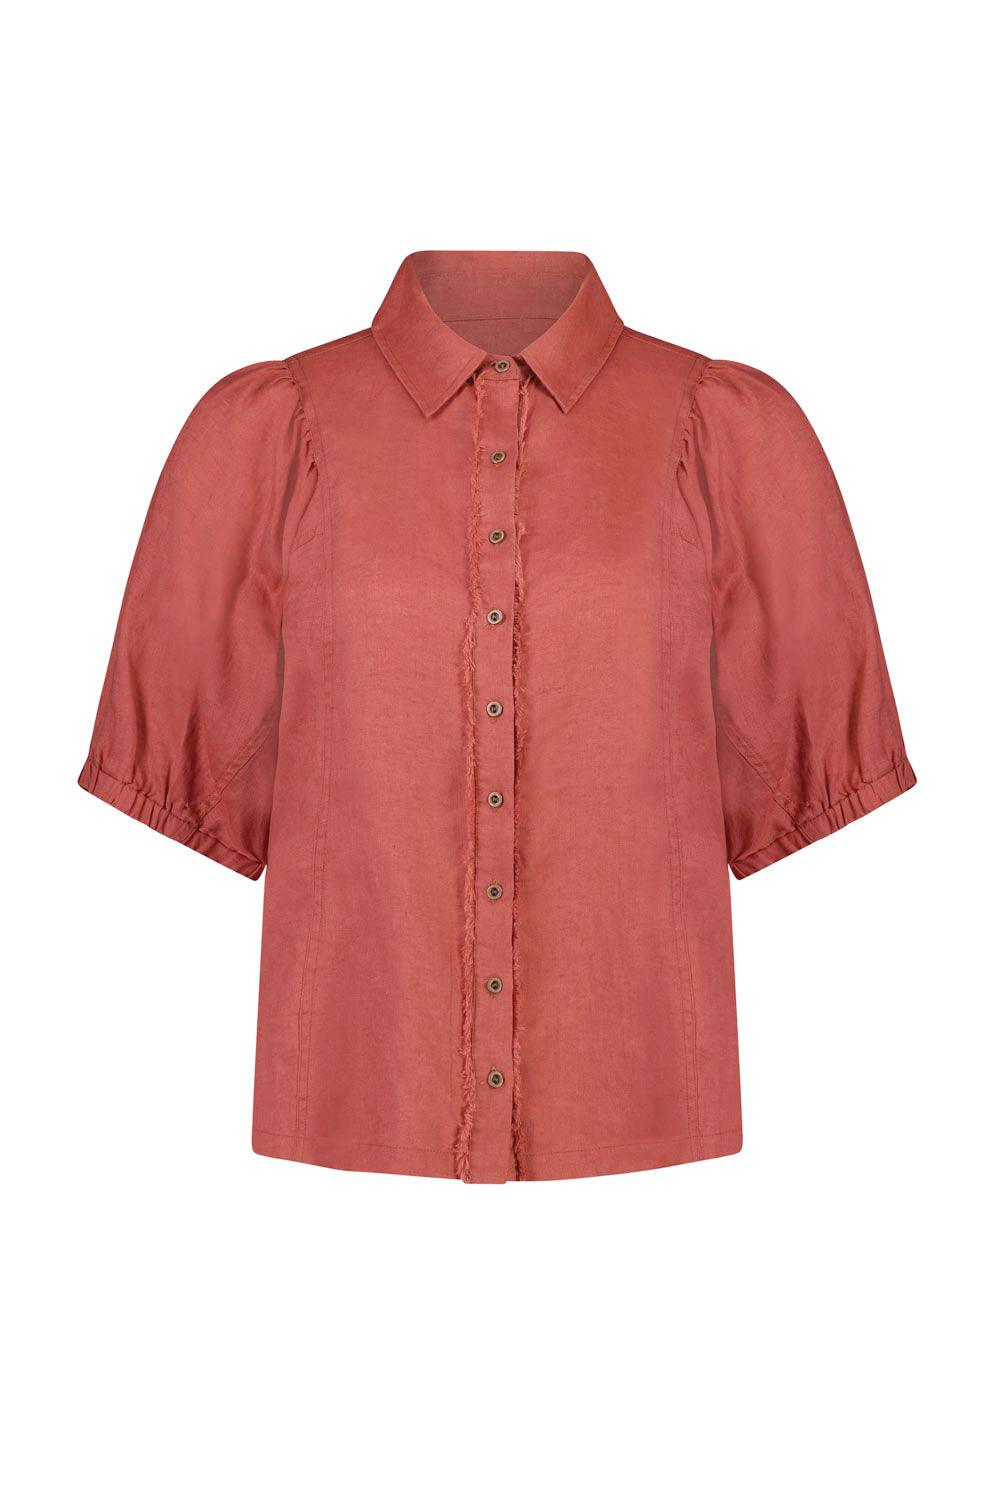 Adorn Shirt - Washed Red - Shirt VERGE